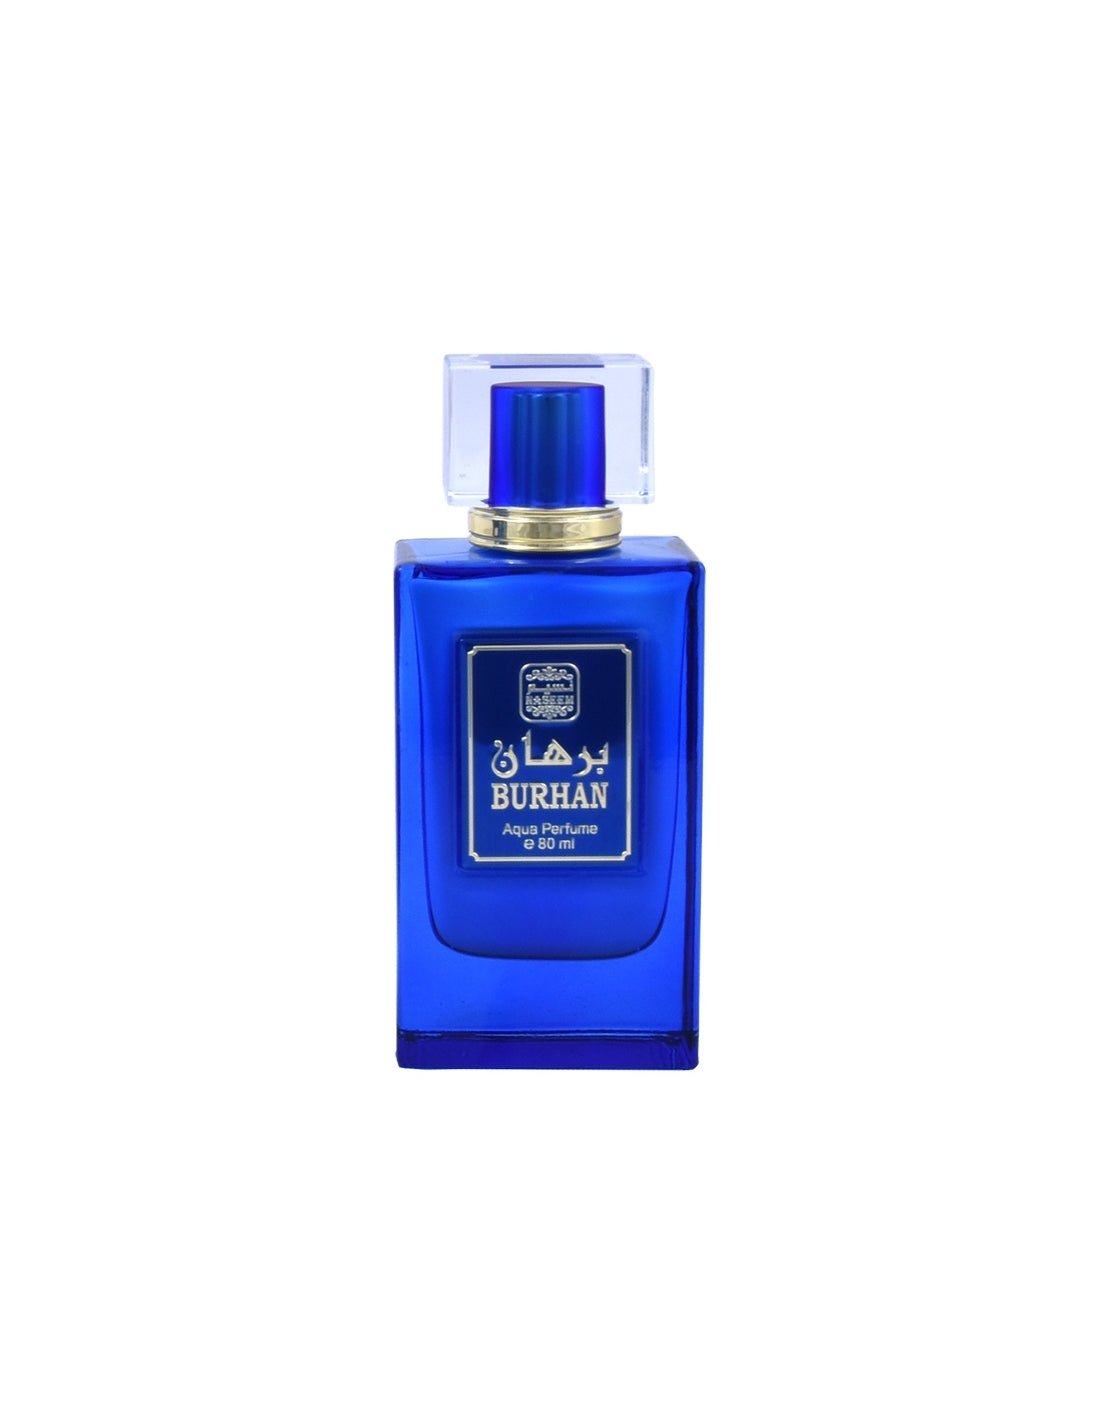 Burhan Aqua Perfume 80ml